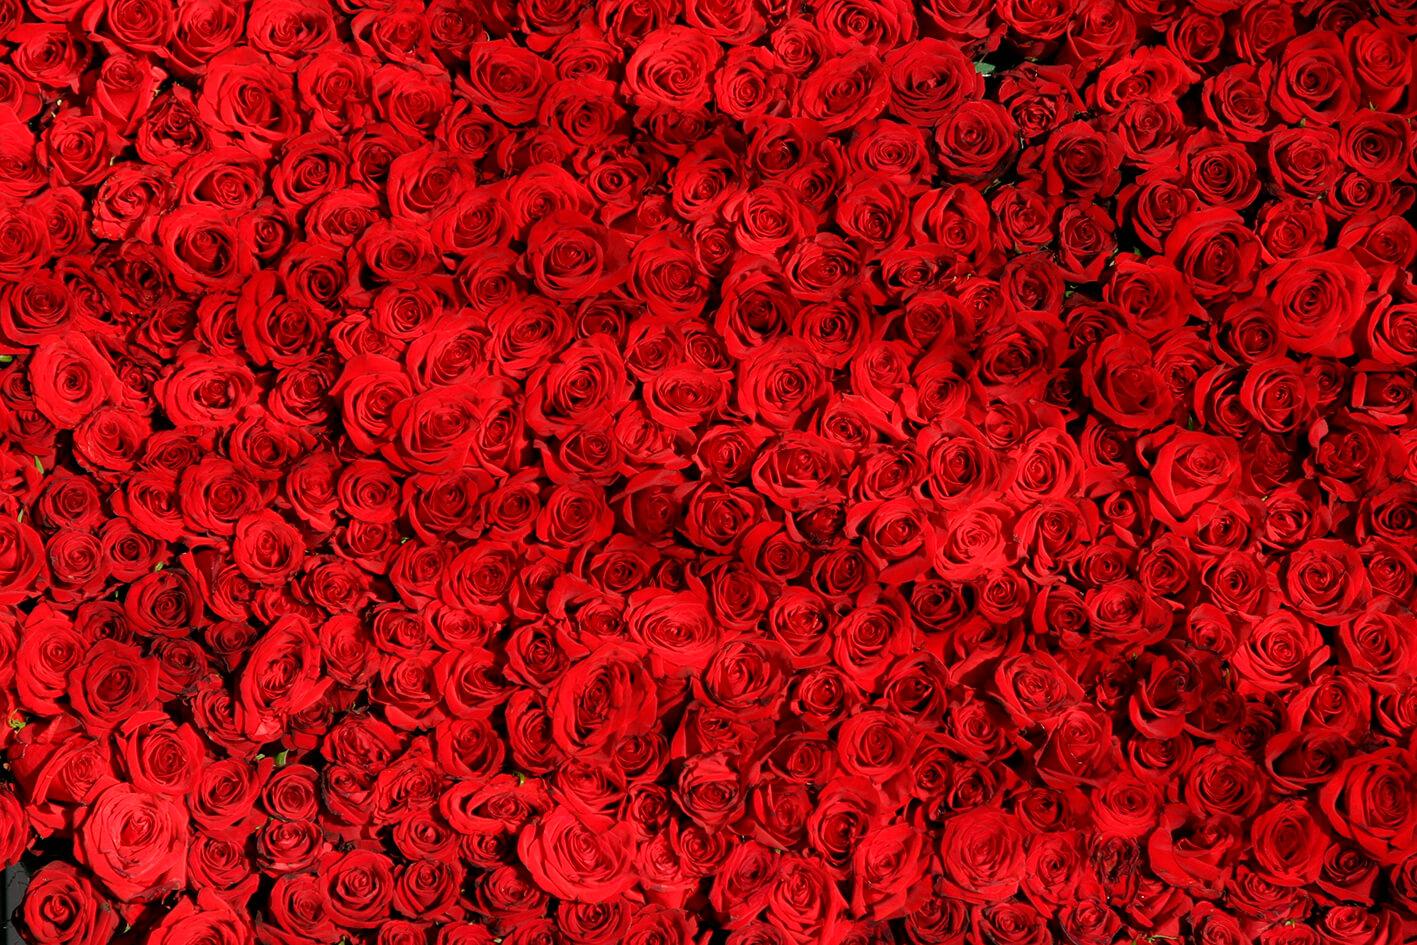 Million Scarlet roses